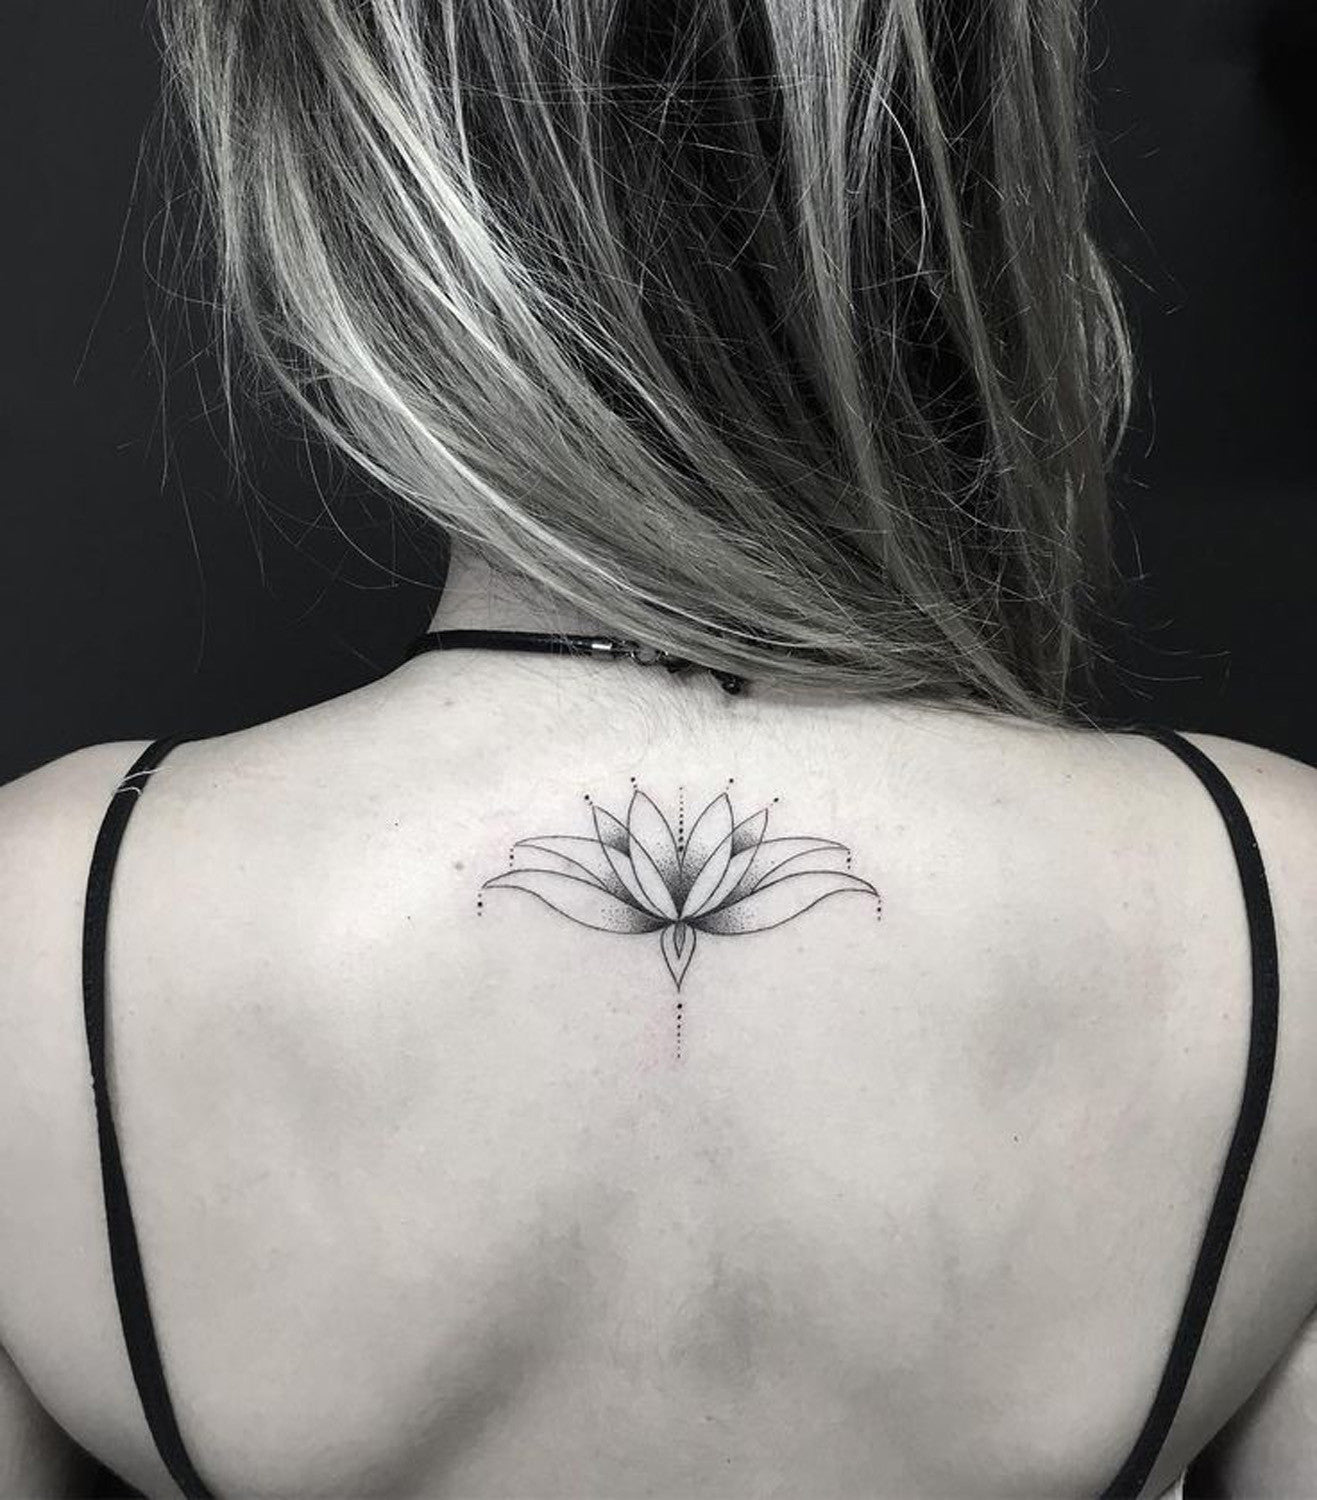 Tattoo Ideas For Women On Upper Back